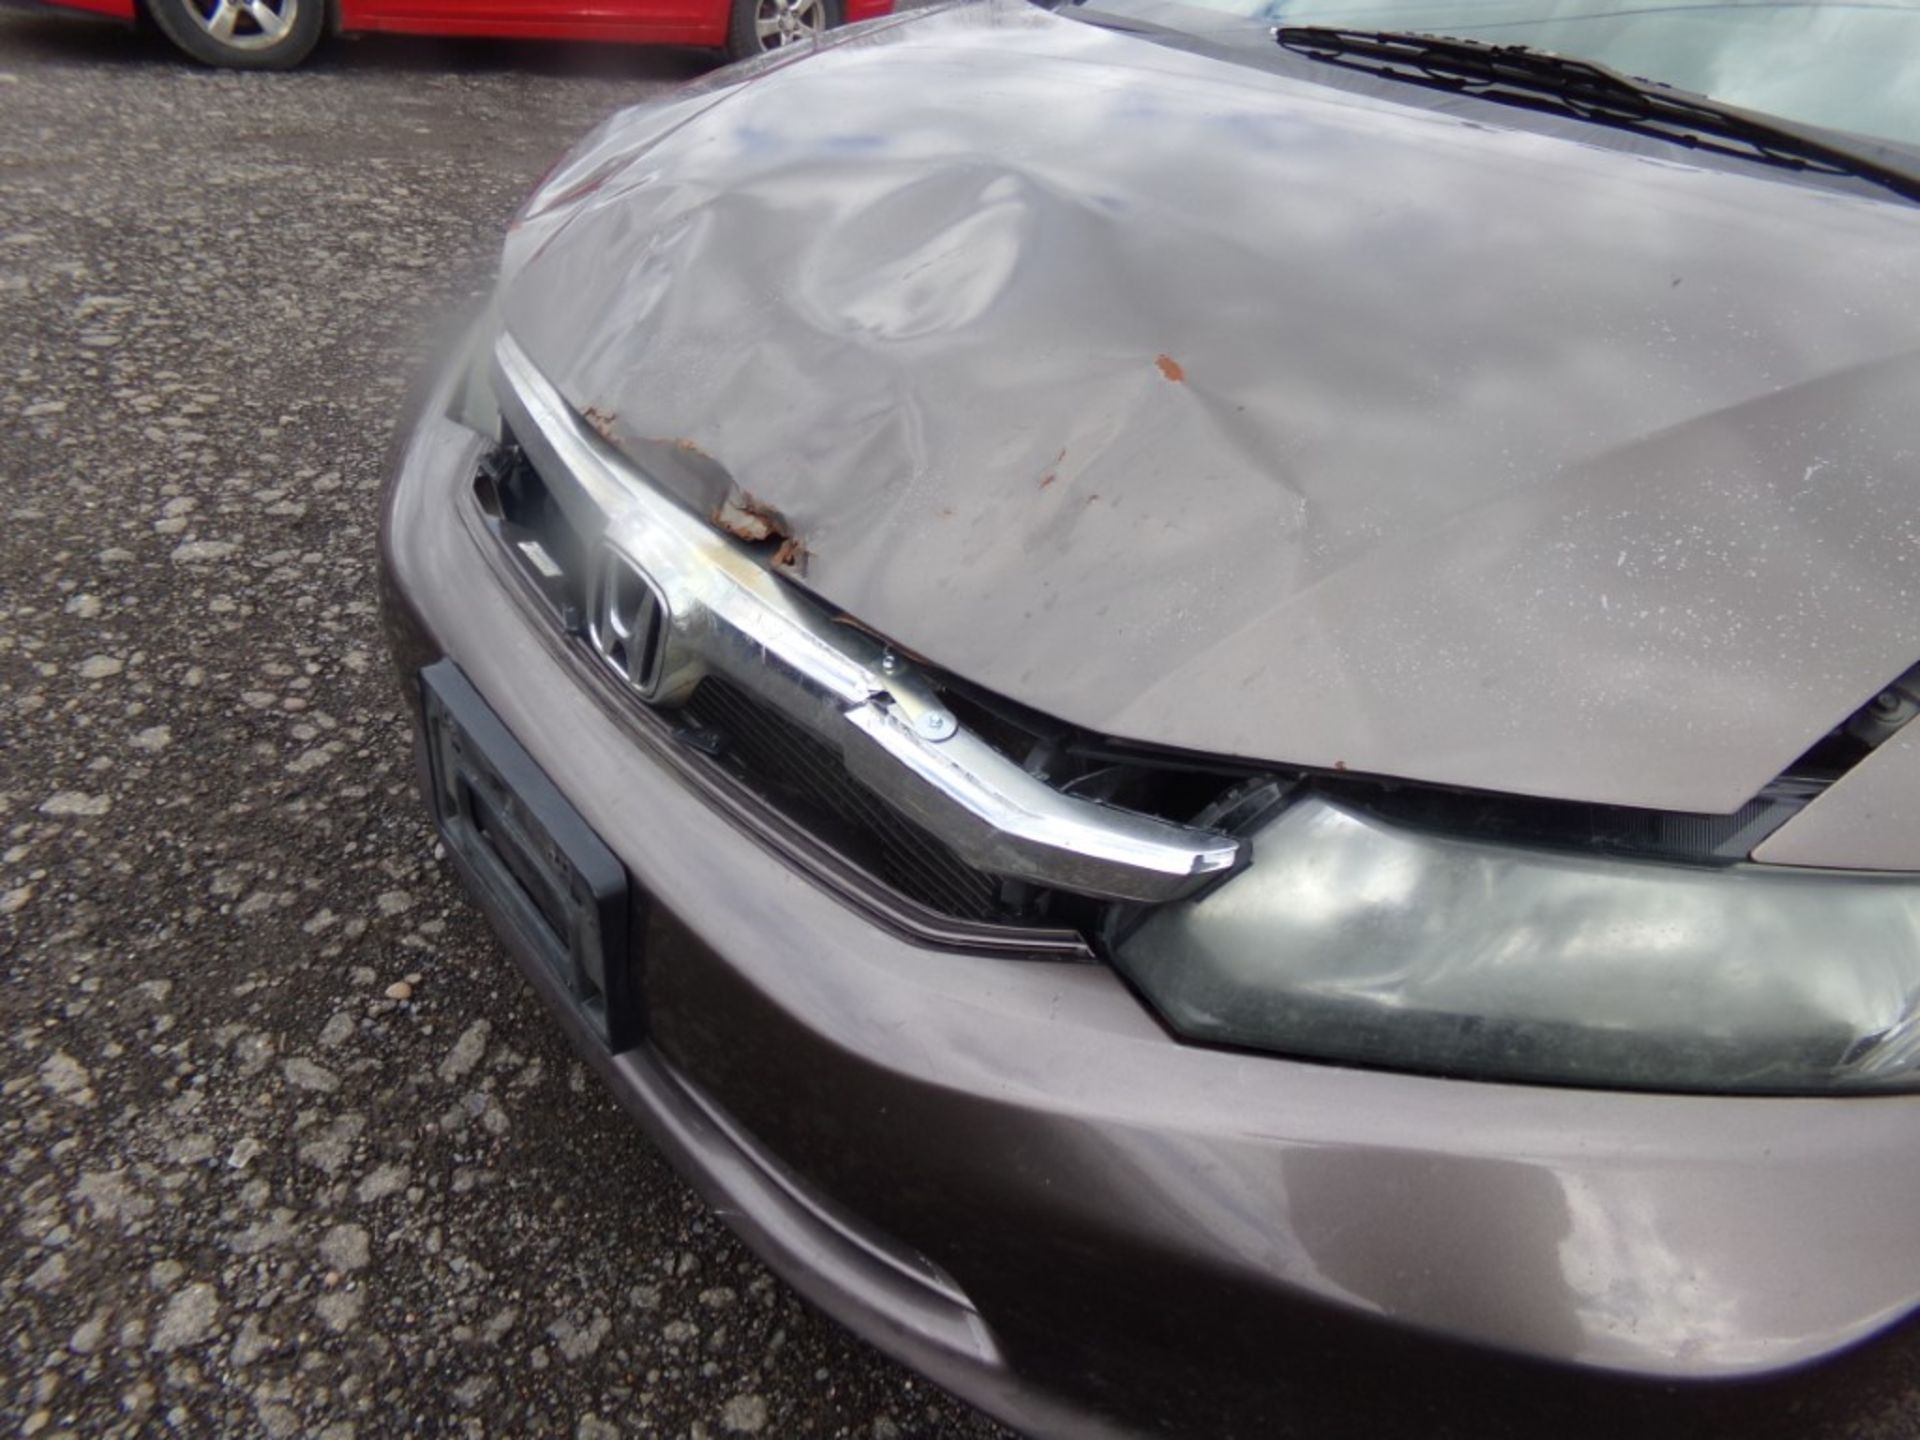 2012 Honda Civic LX, Gray, 163,644 Miles, VIN#: 2HGFB2F55CH572783, CRACKED WINDSHIELD, PAINT FADED - Bild 6 aus 11